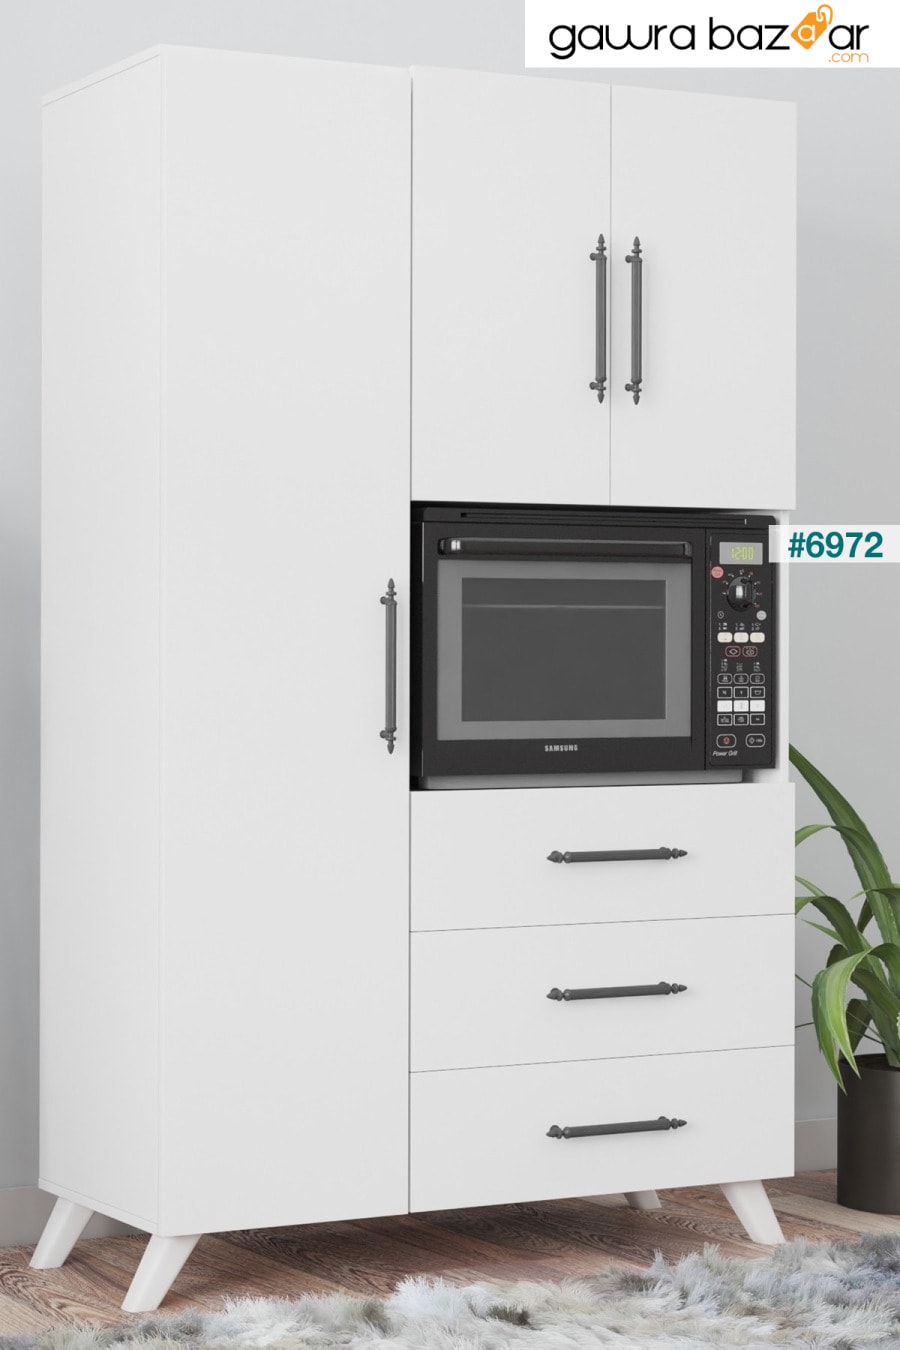 Ae-2074 Aras الأبيض خزانة مطبخ متعددة الأغراض وخزانة حمام ، مخزن ، 3 أبواب ، 3 أدراج ، قسم الفرن Aeka 1